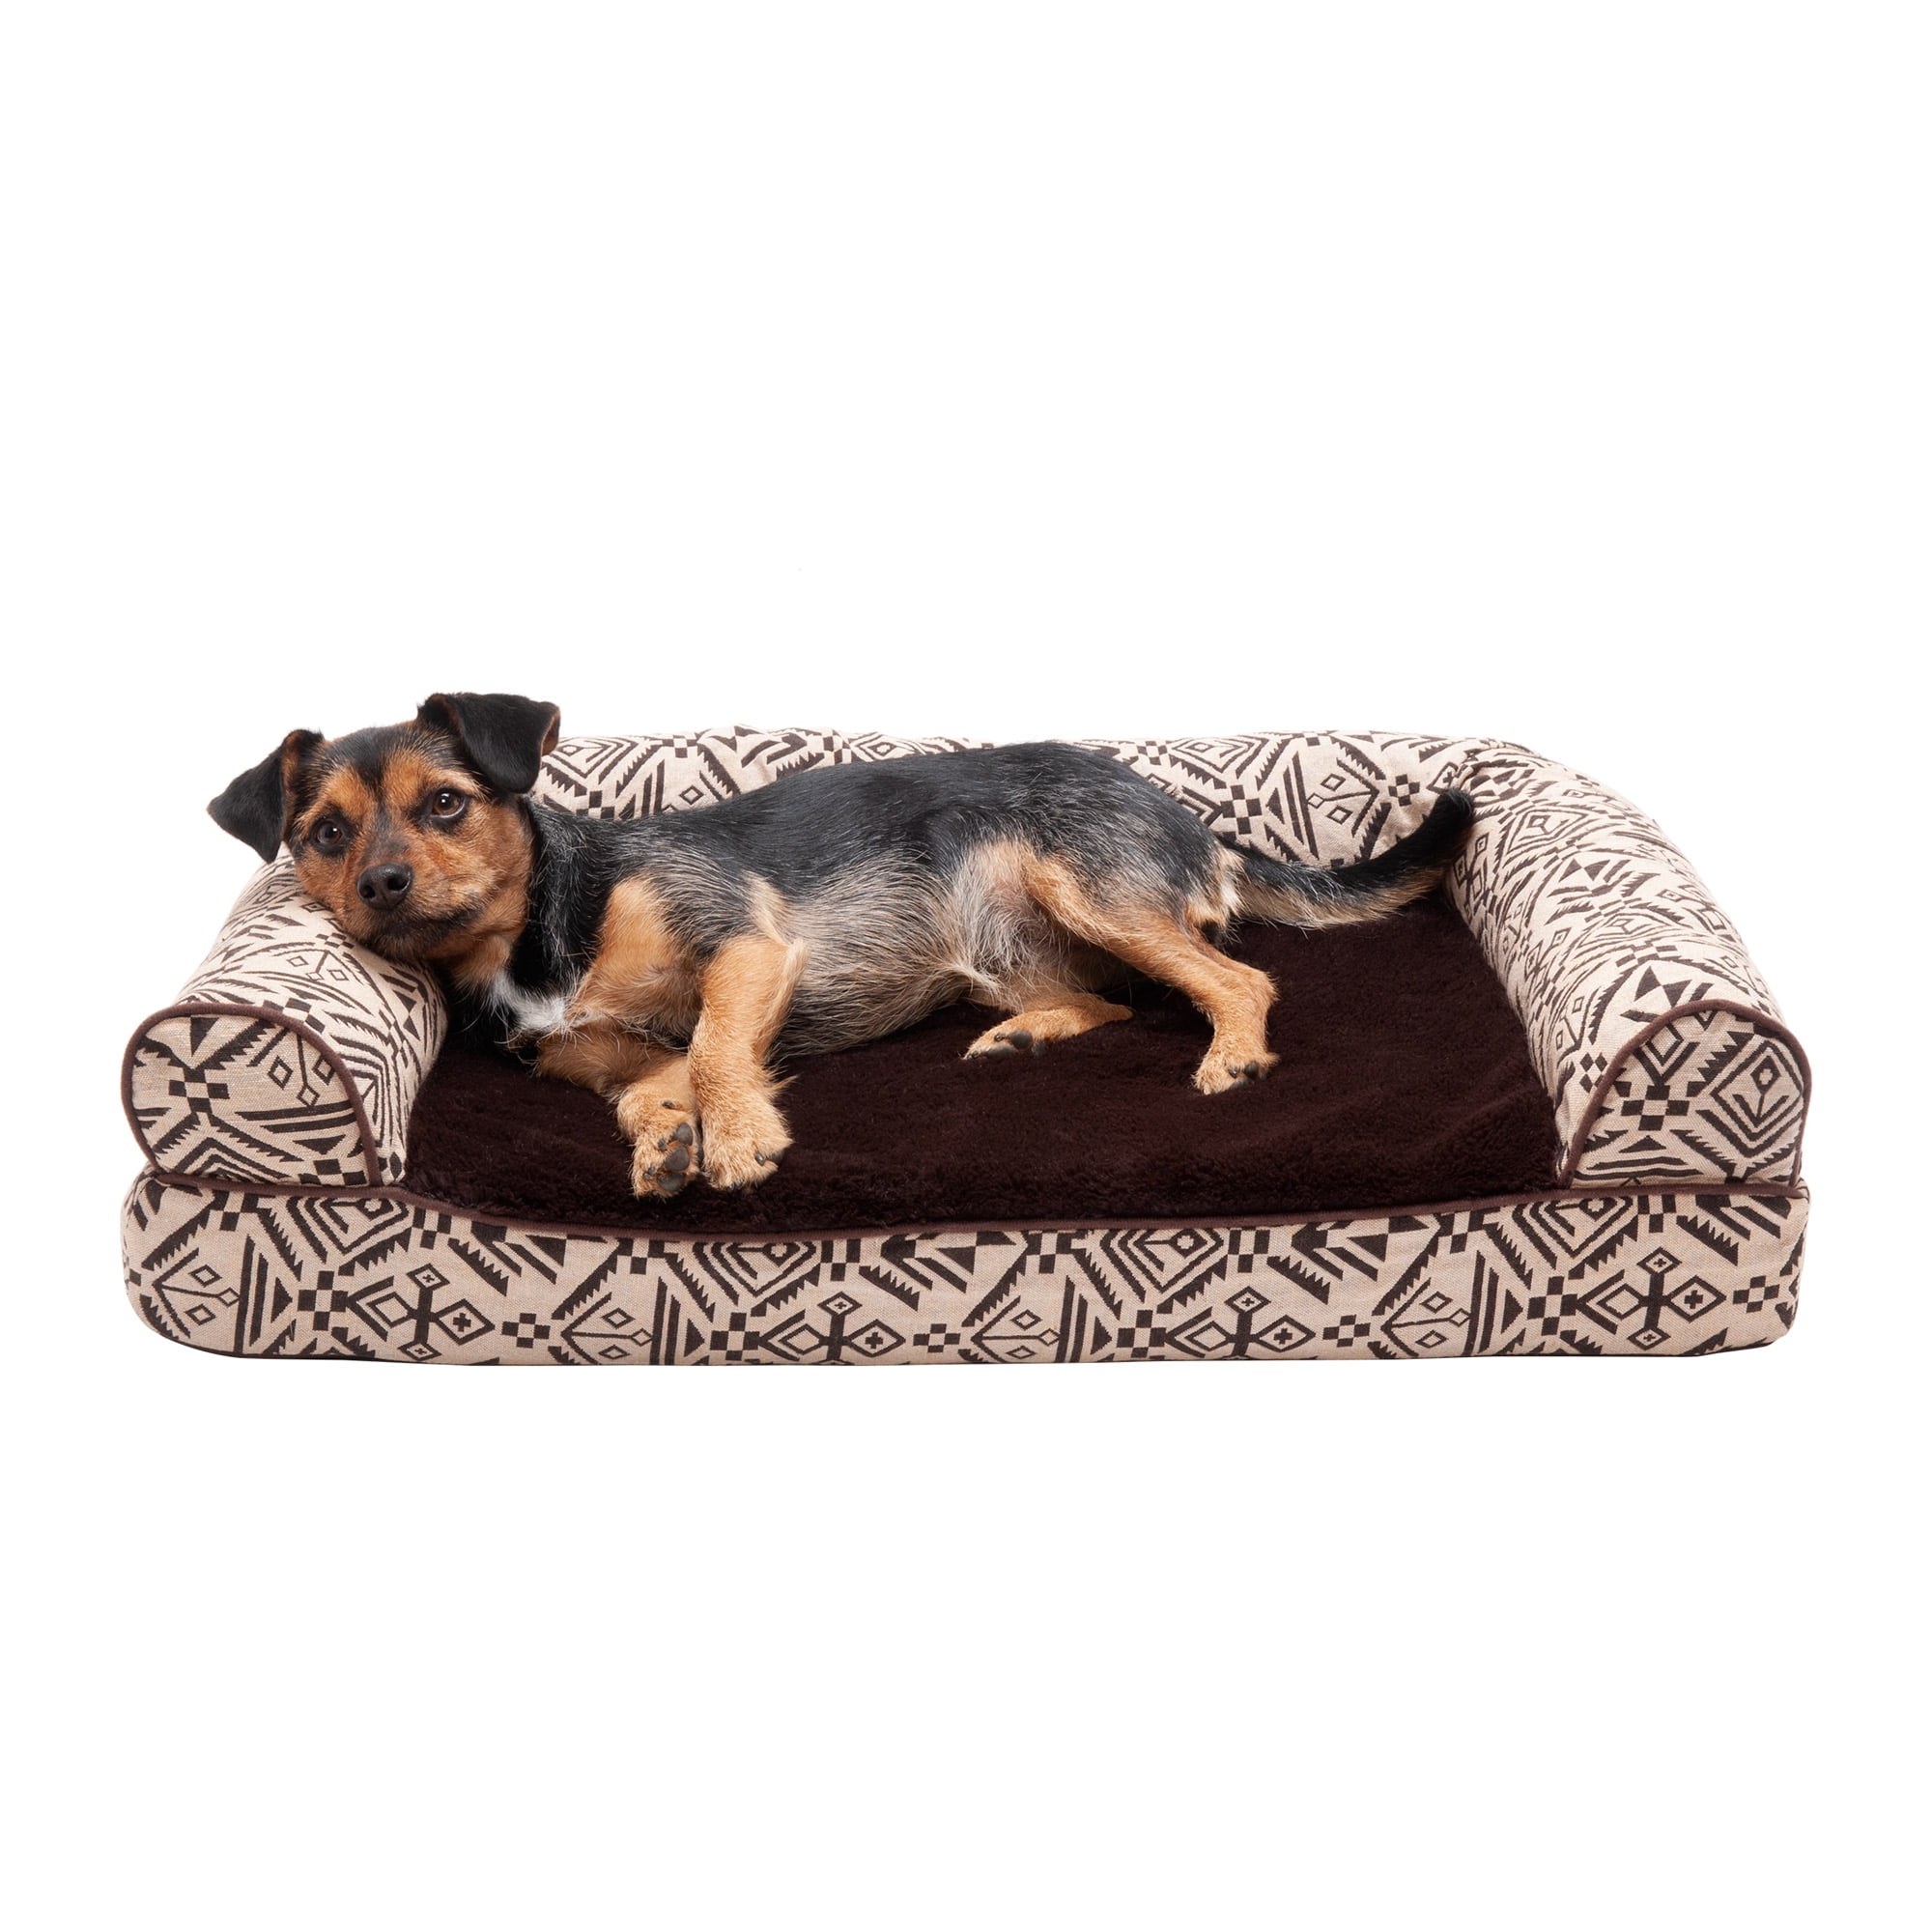 Veehoo Soft Air Mattress Dog Bed, Orthopedic Styles